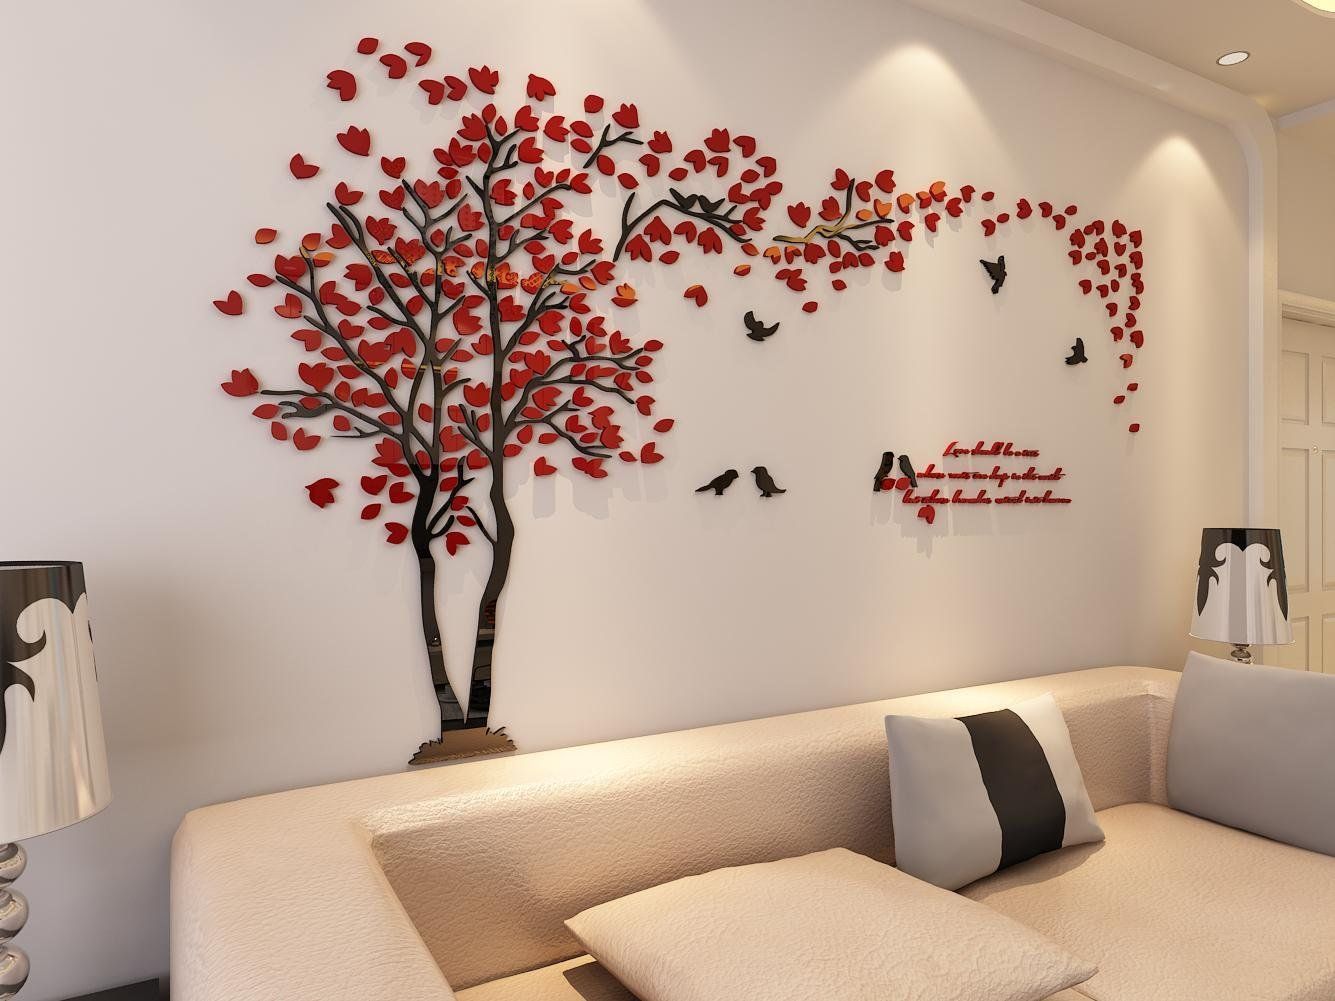 Нарисованное дерево на стене в интерьере (45 фото)